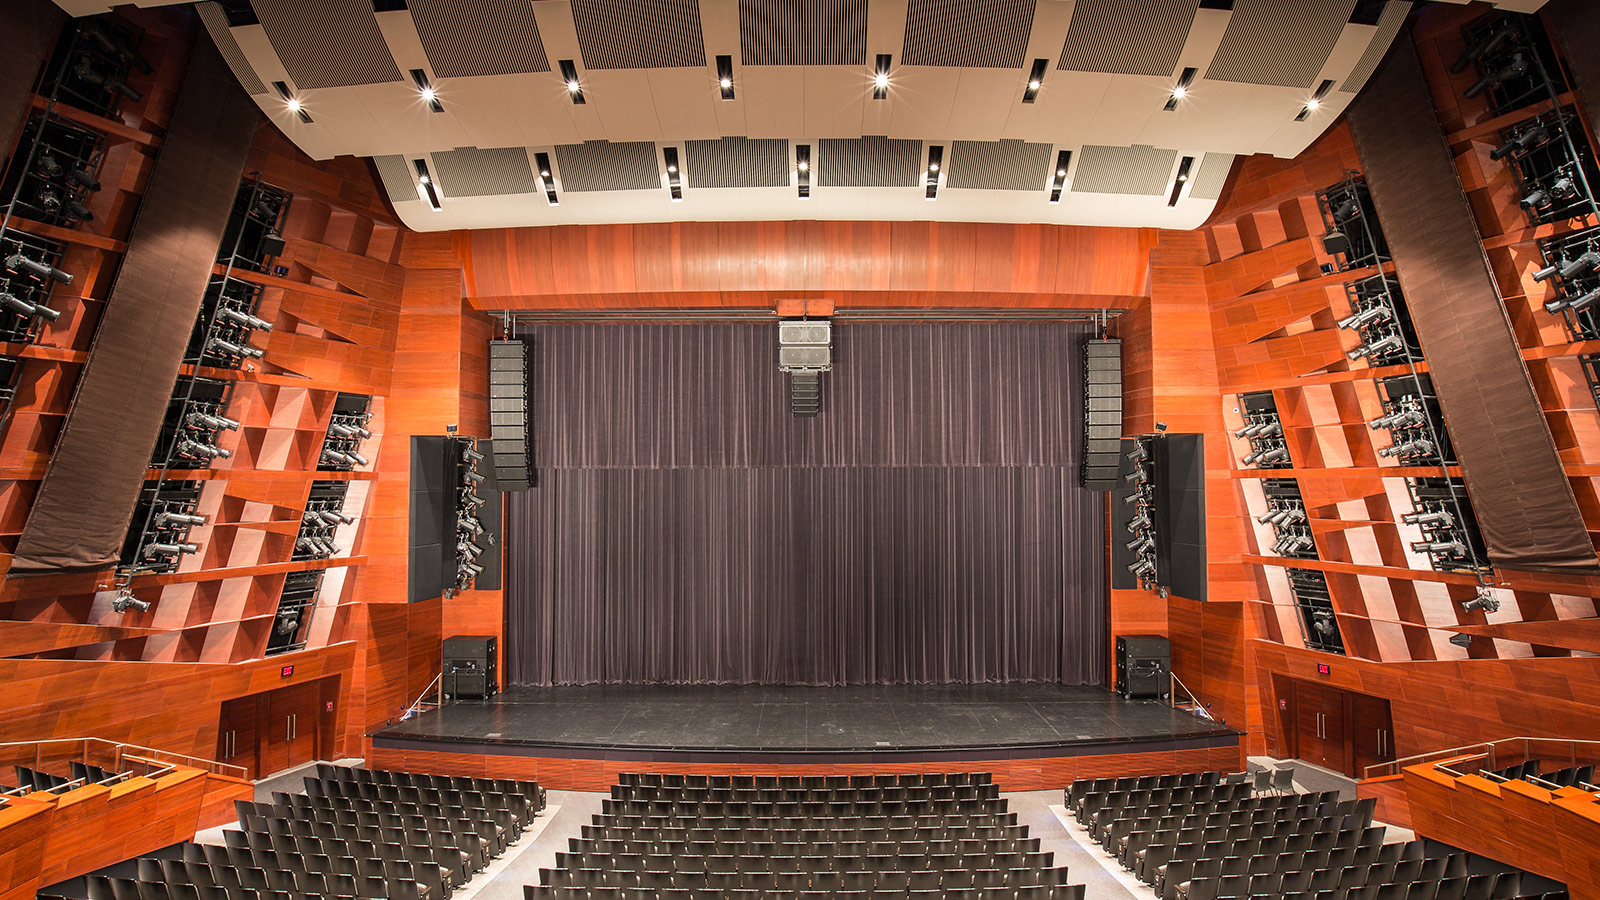 Northern Alberta Jubilee Auditorium (NAJA) – Edmonton, Canada